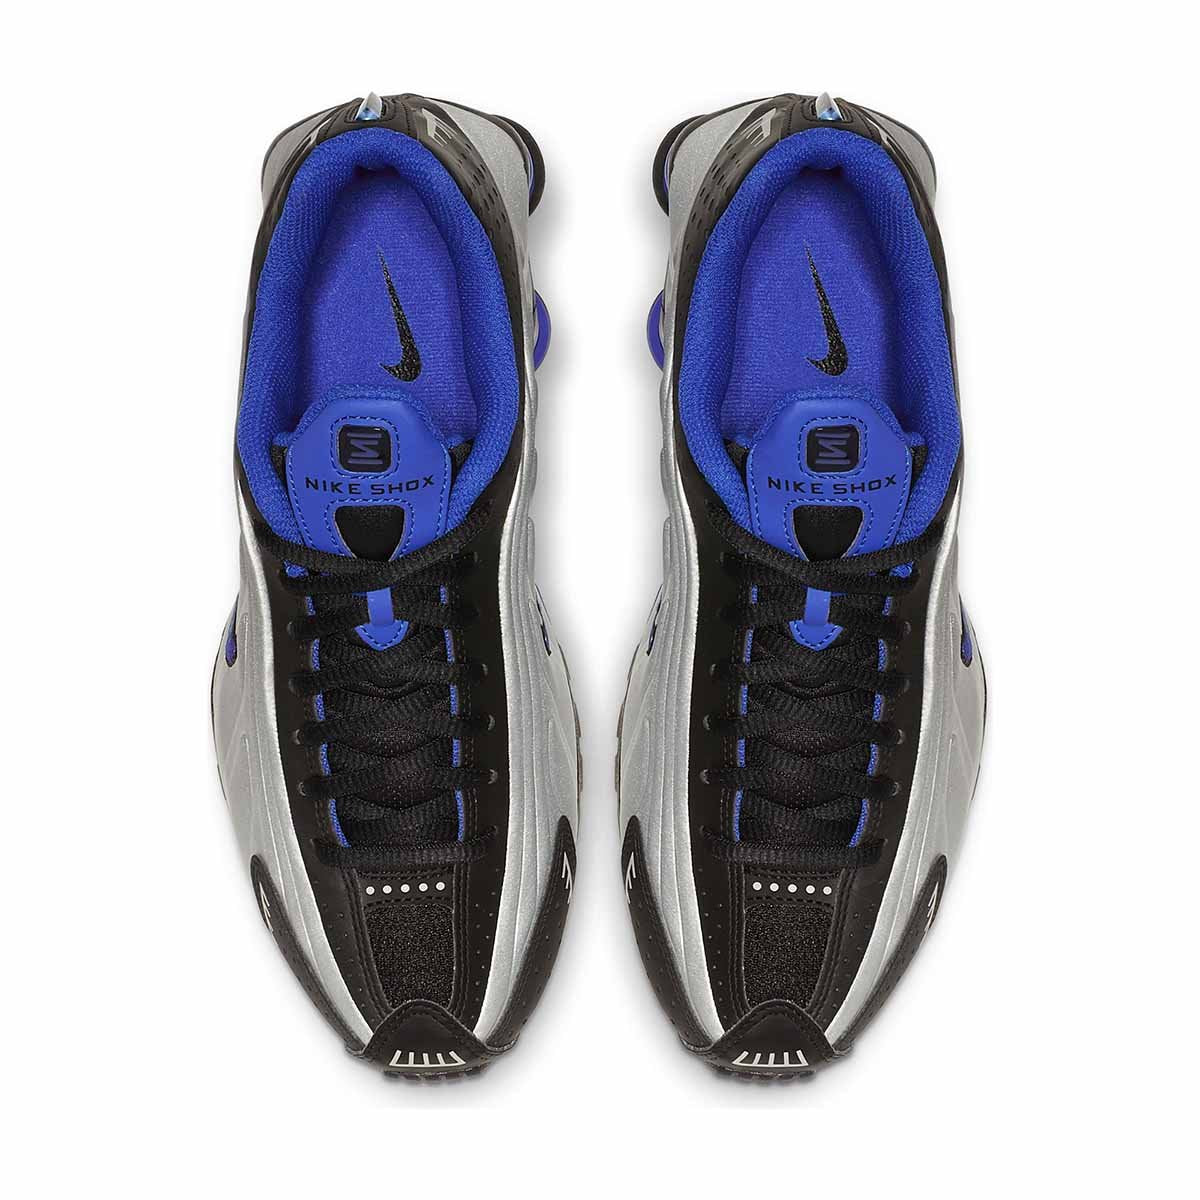 Buy Shock Blue Shoes for Boys by Adidas Kids Online | Ajio.com